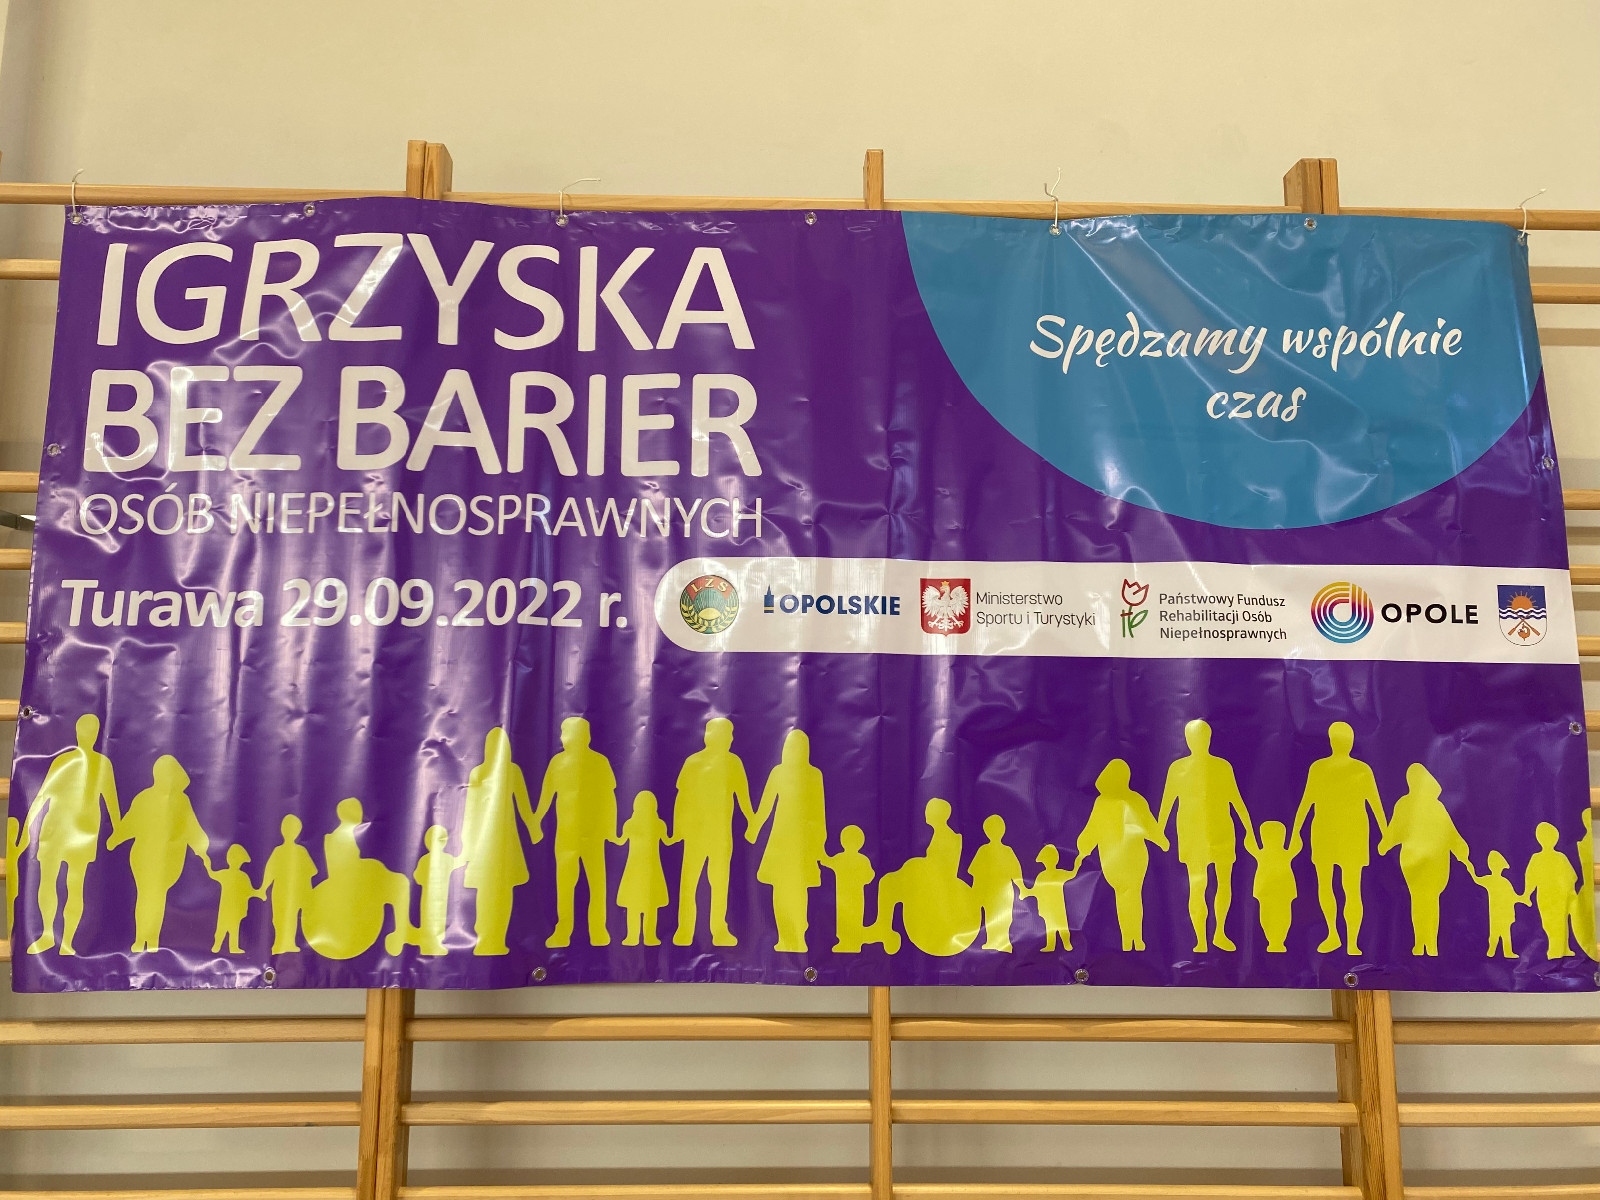 Igrzyska Bez Barier - Turawa 29.09.2022